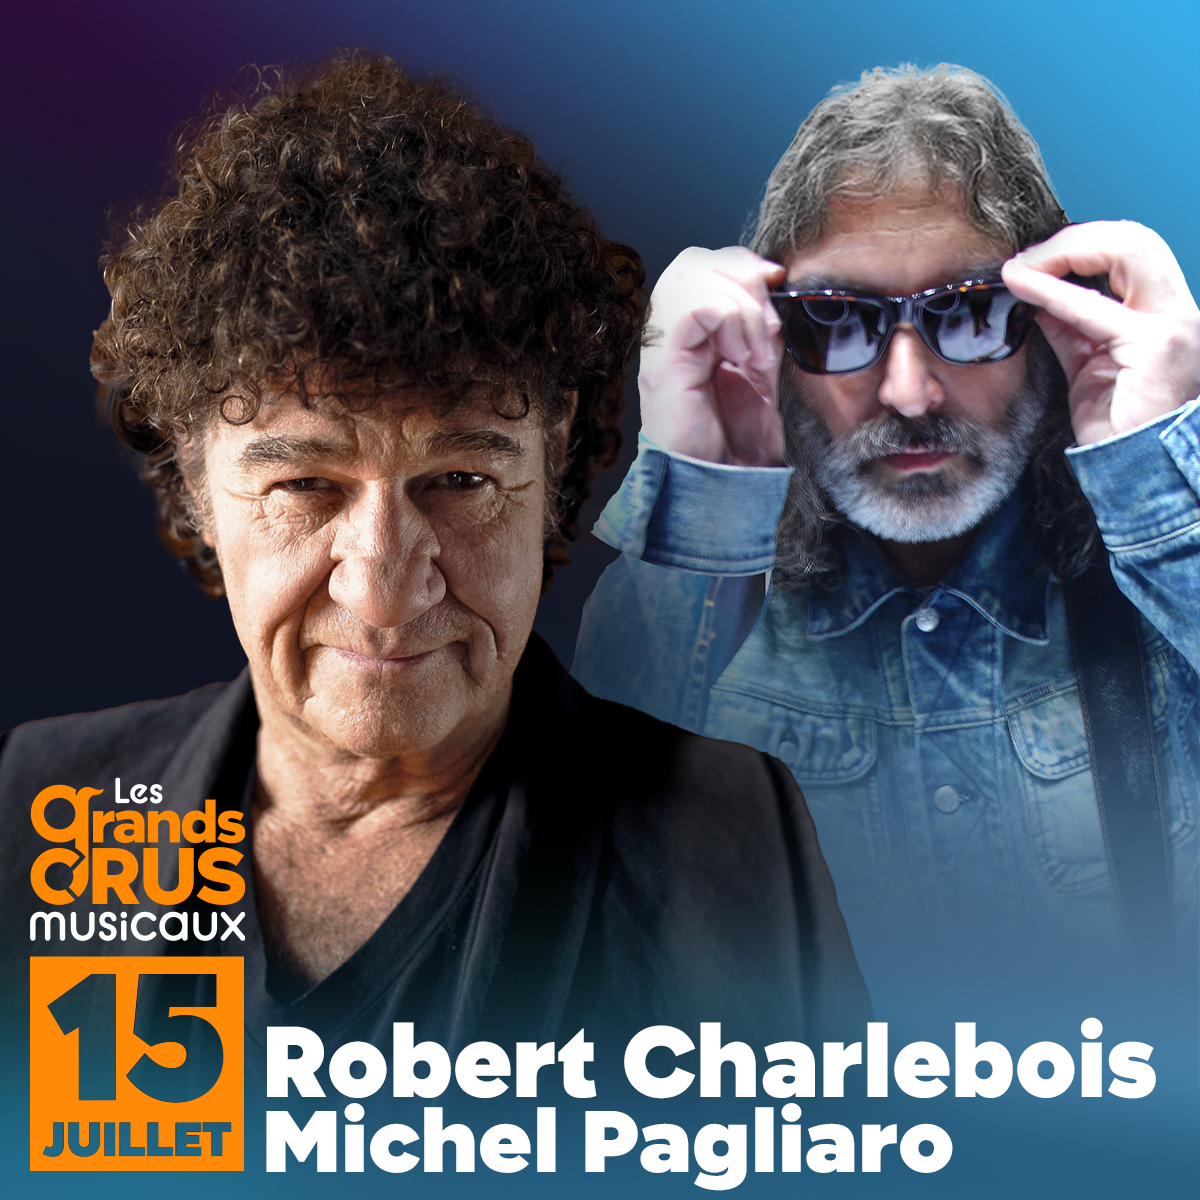 Robert Charlebois & Michel Pagliaro - Les grands crus musicaux